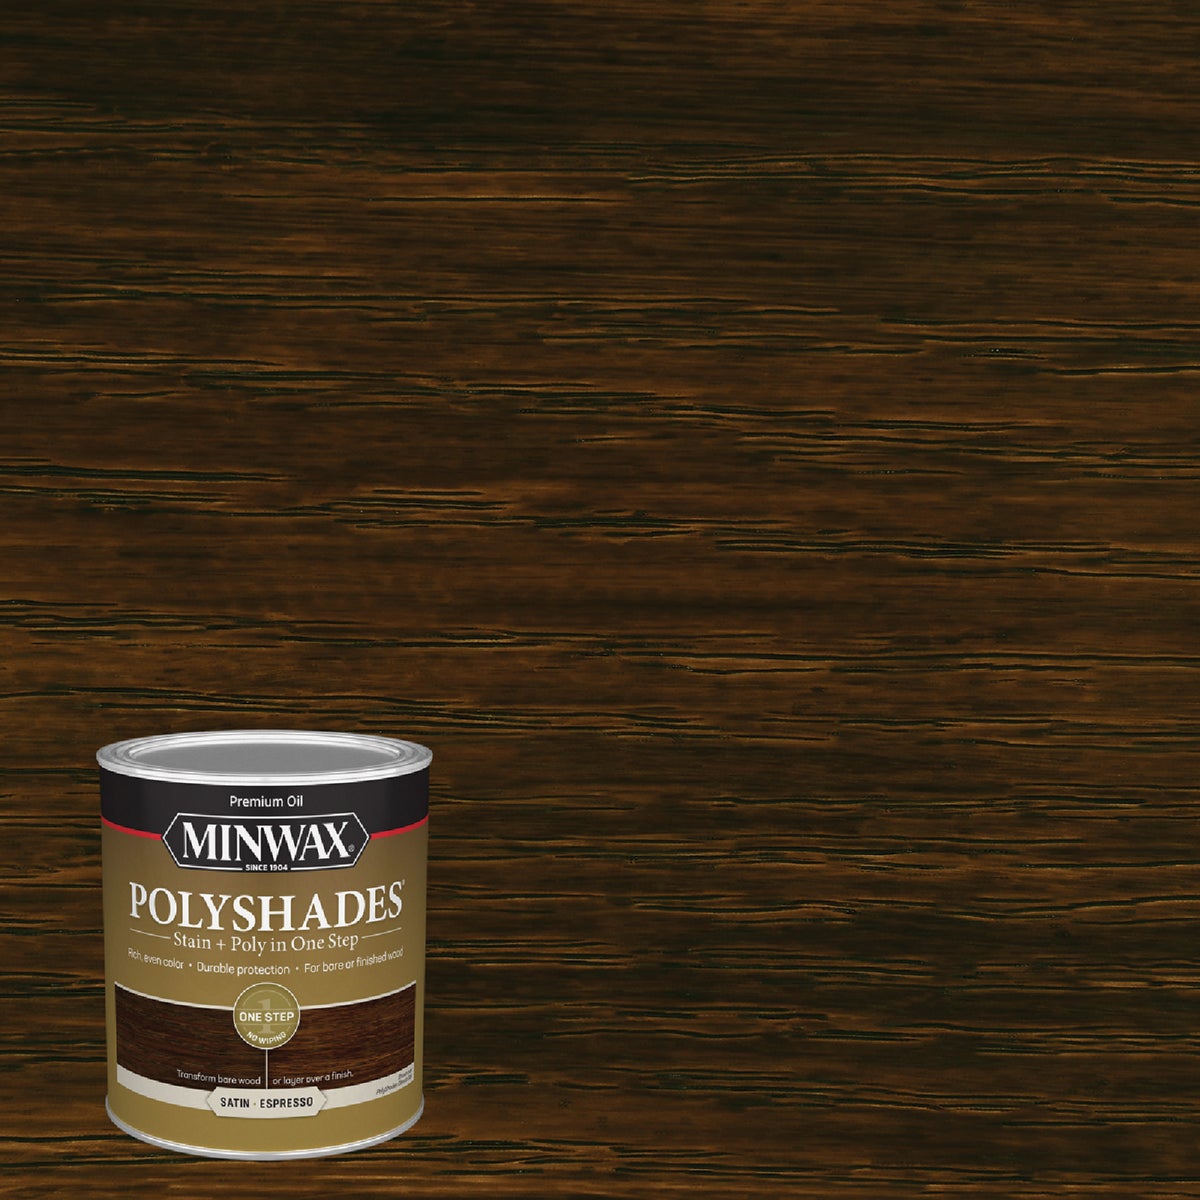 Minwax Polyshades 1 Qt. Satin Stain & Finish Polyurethane In 1-Step, Espresso